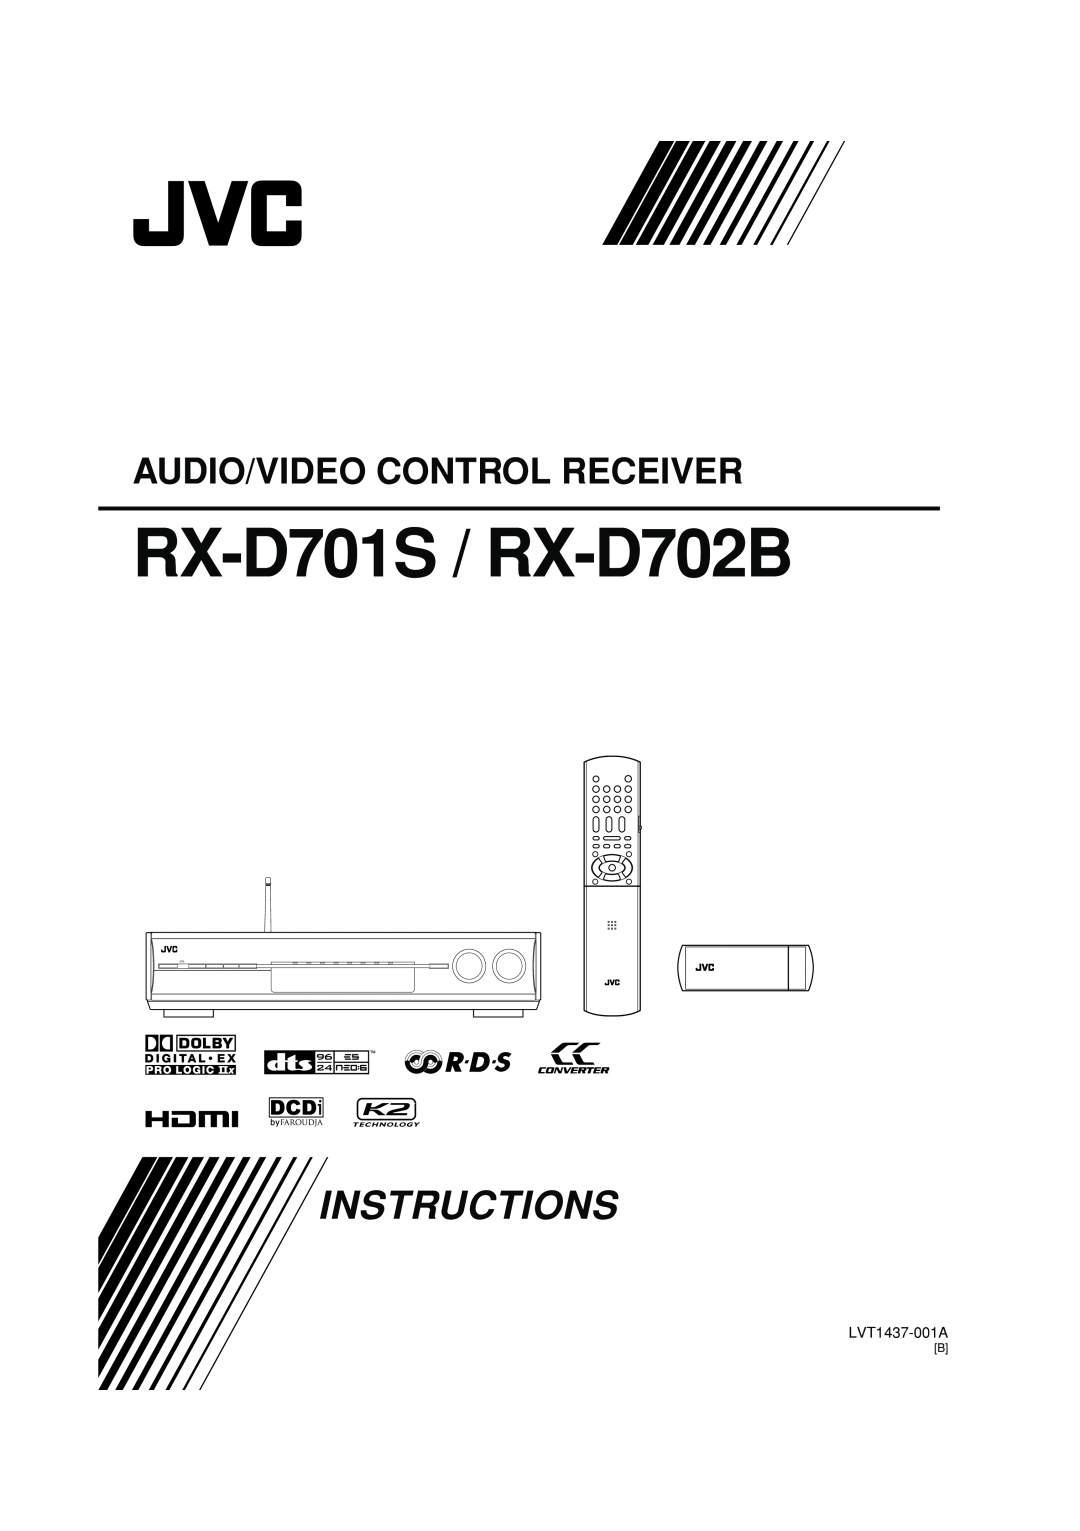 JVC LVT1437-001A, 1105RYMMDWJEIN manual RX-D701S / RX-D702B, Instructions, Audio/Video Control Receiver 